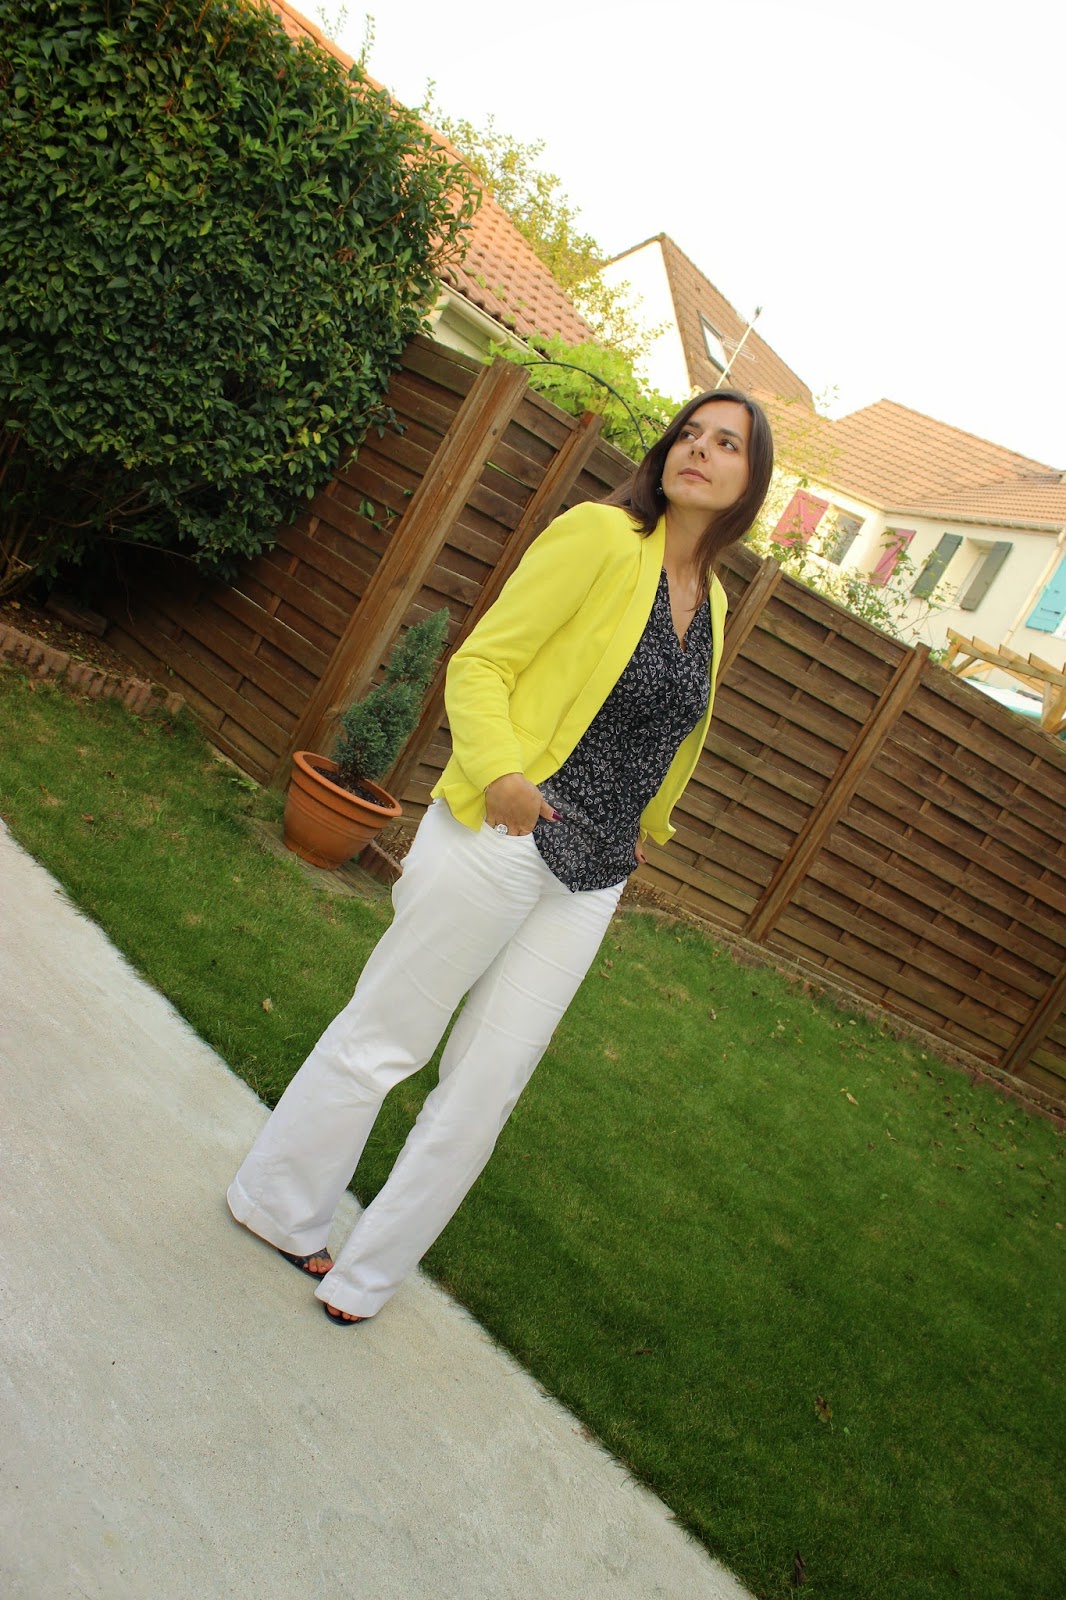 Veste jaune, pantalon blanc, chaussures bleues kookai